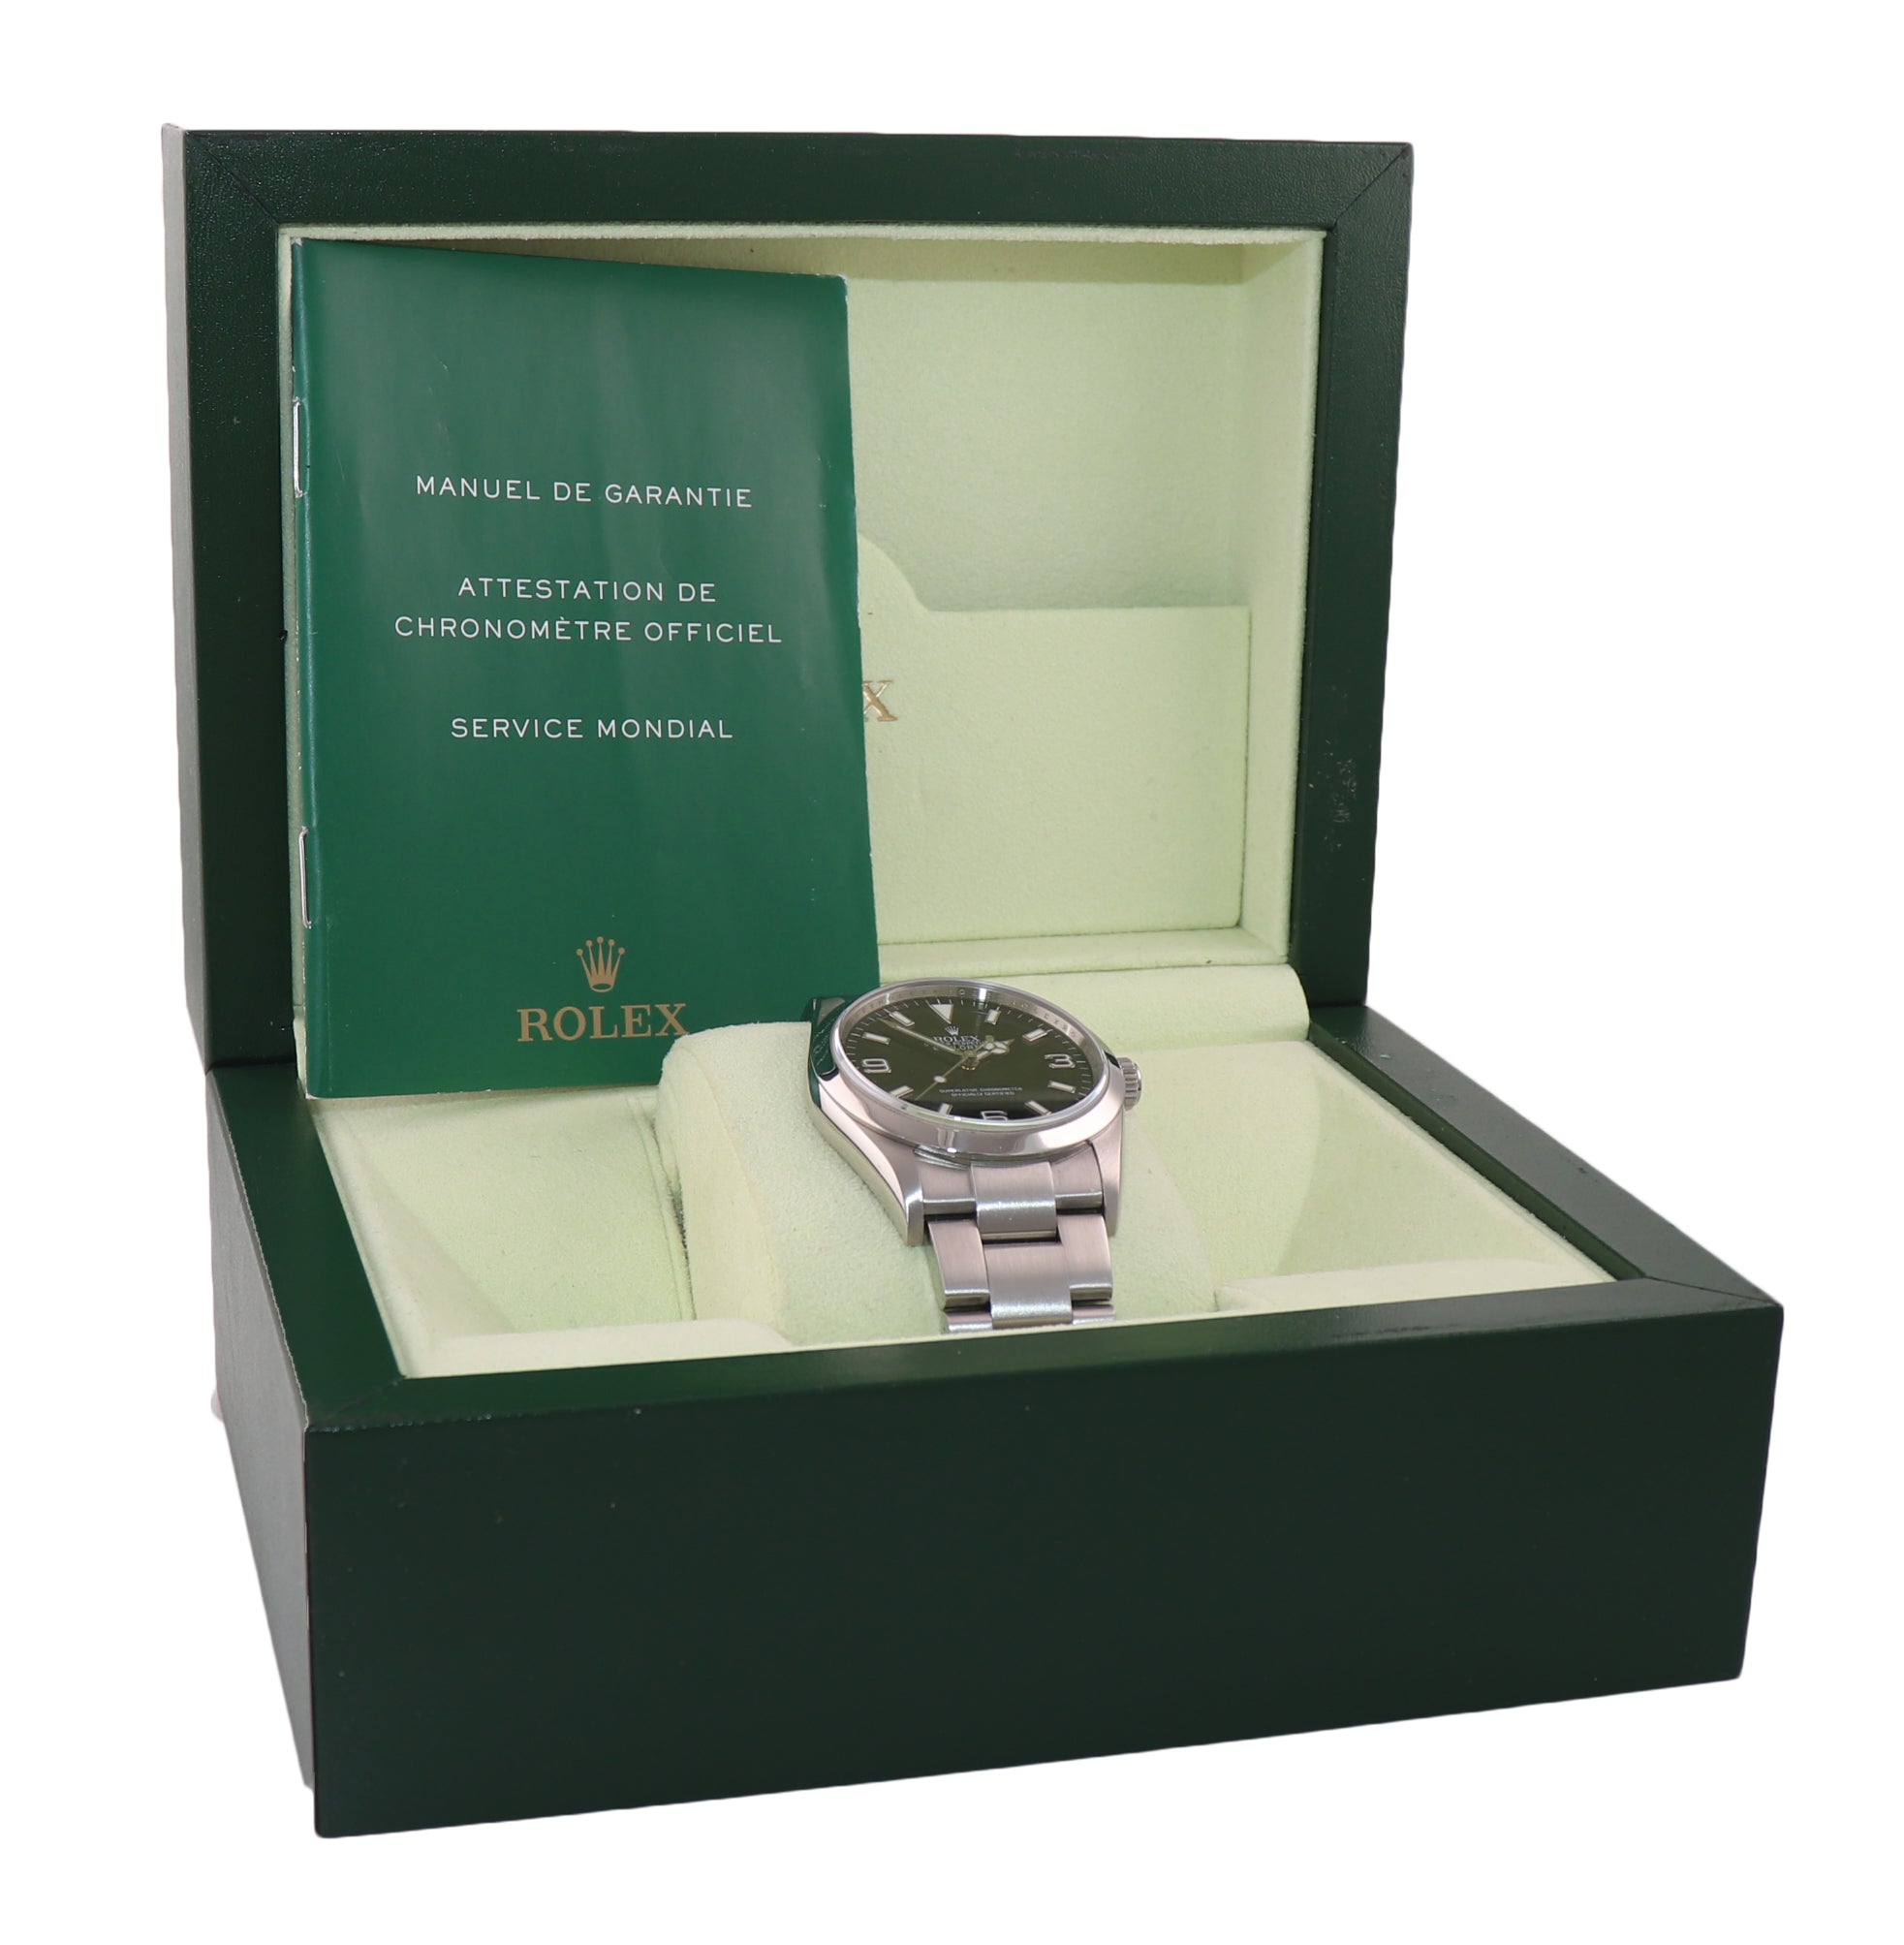 2007 ENGRAVED REHAUT Rolex Explorer I Black 36mm 114270 Steel Black Arabic Watch